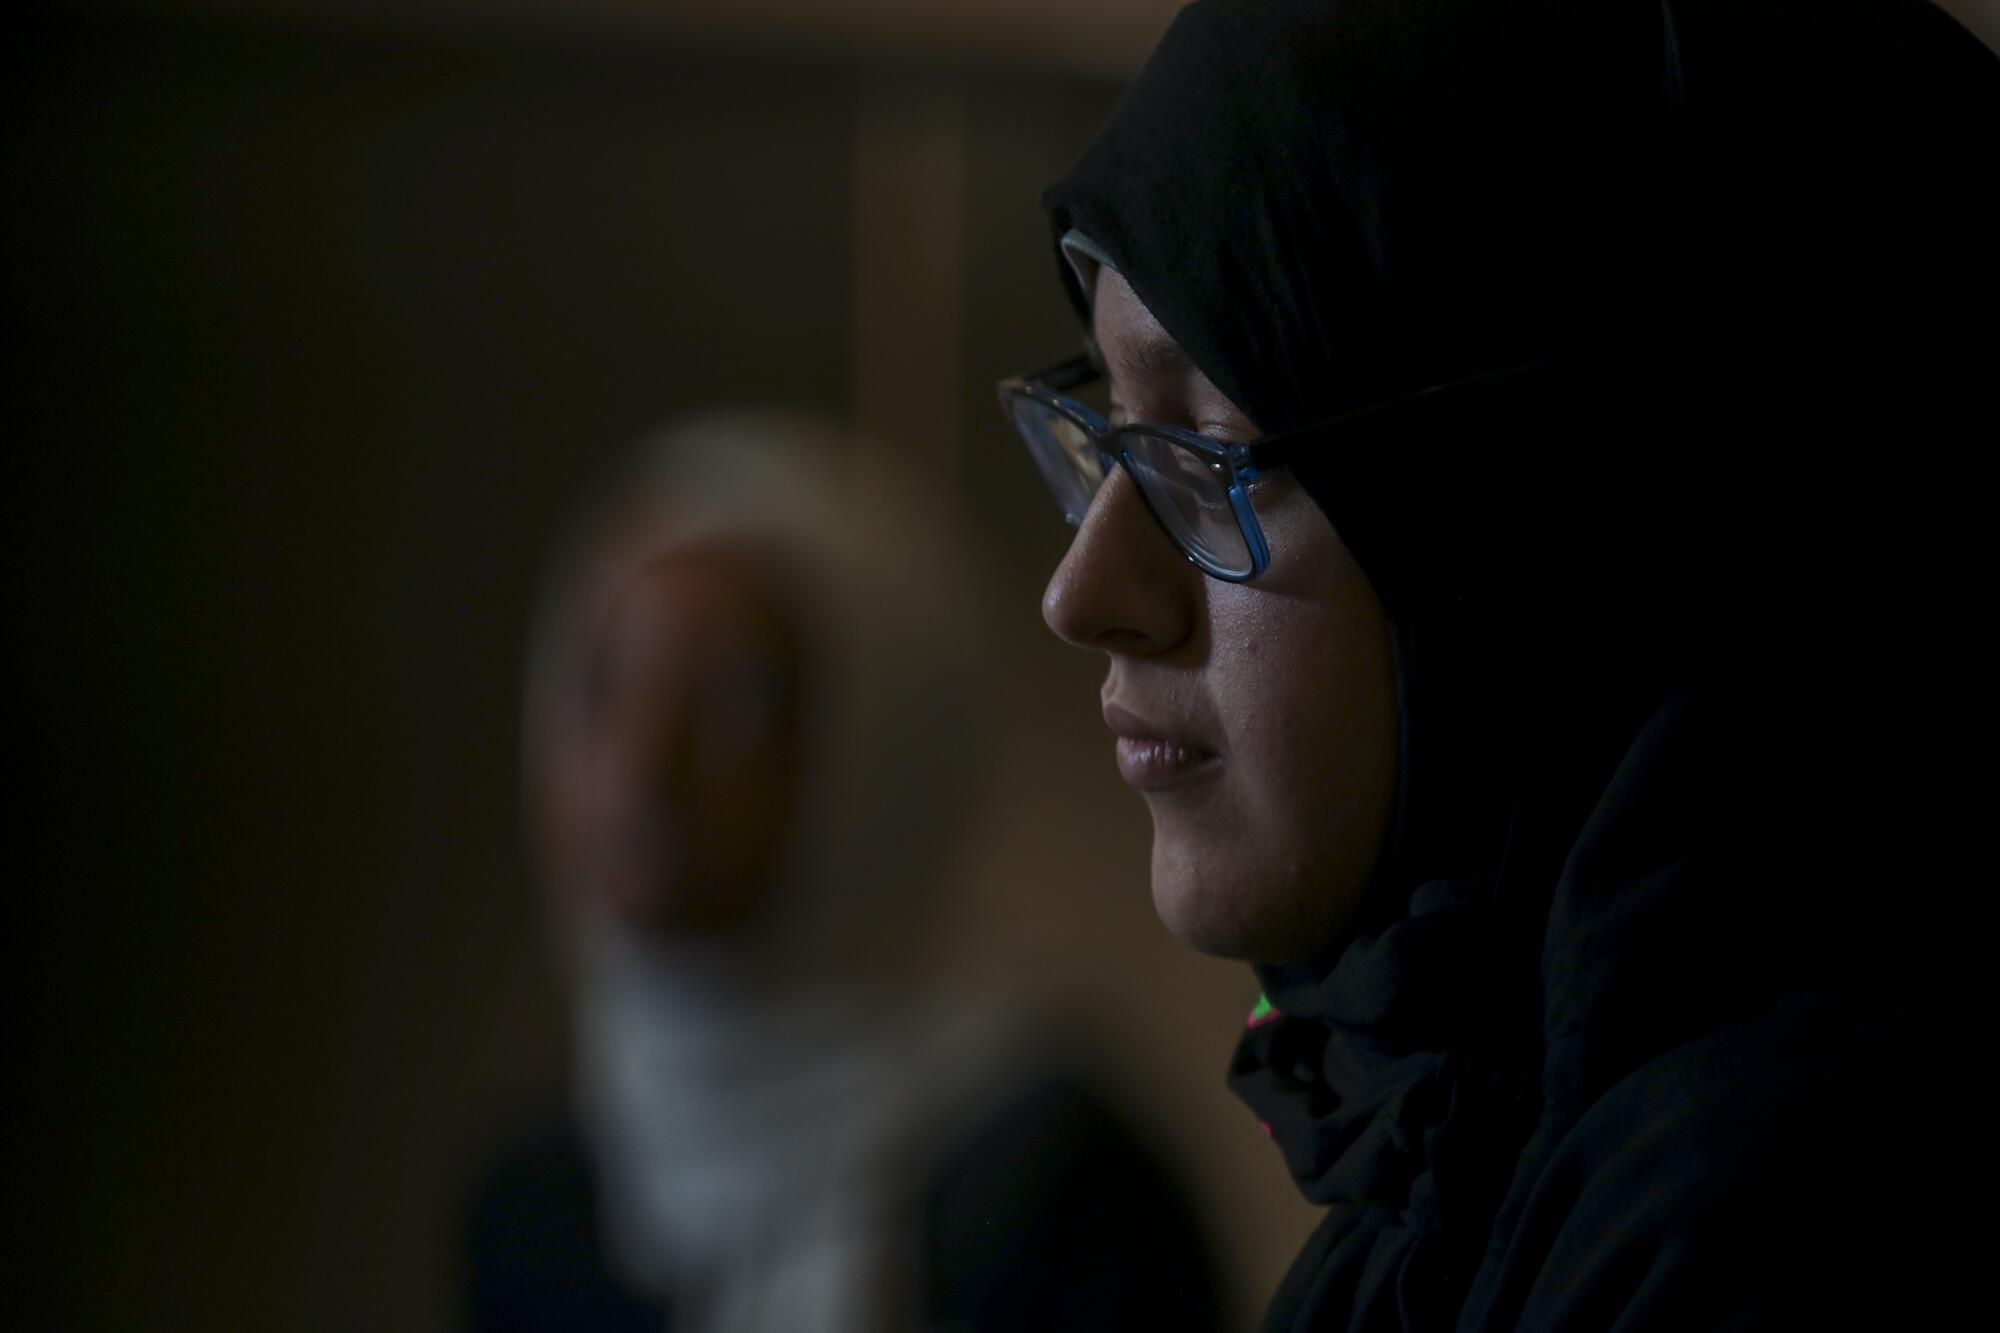 Hanae Bentchich, 21, discusses the discrimination American Muslims face.